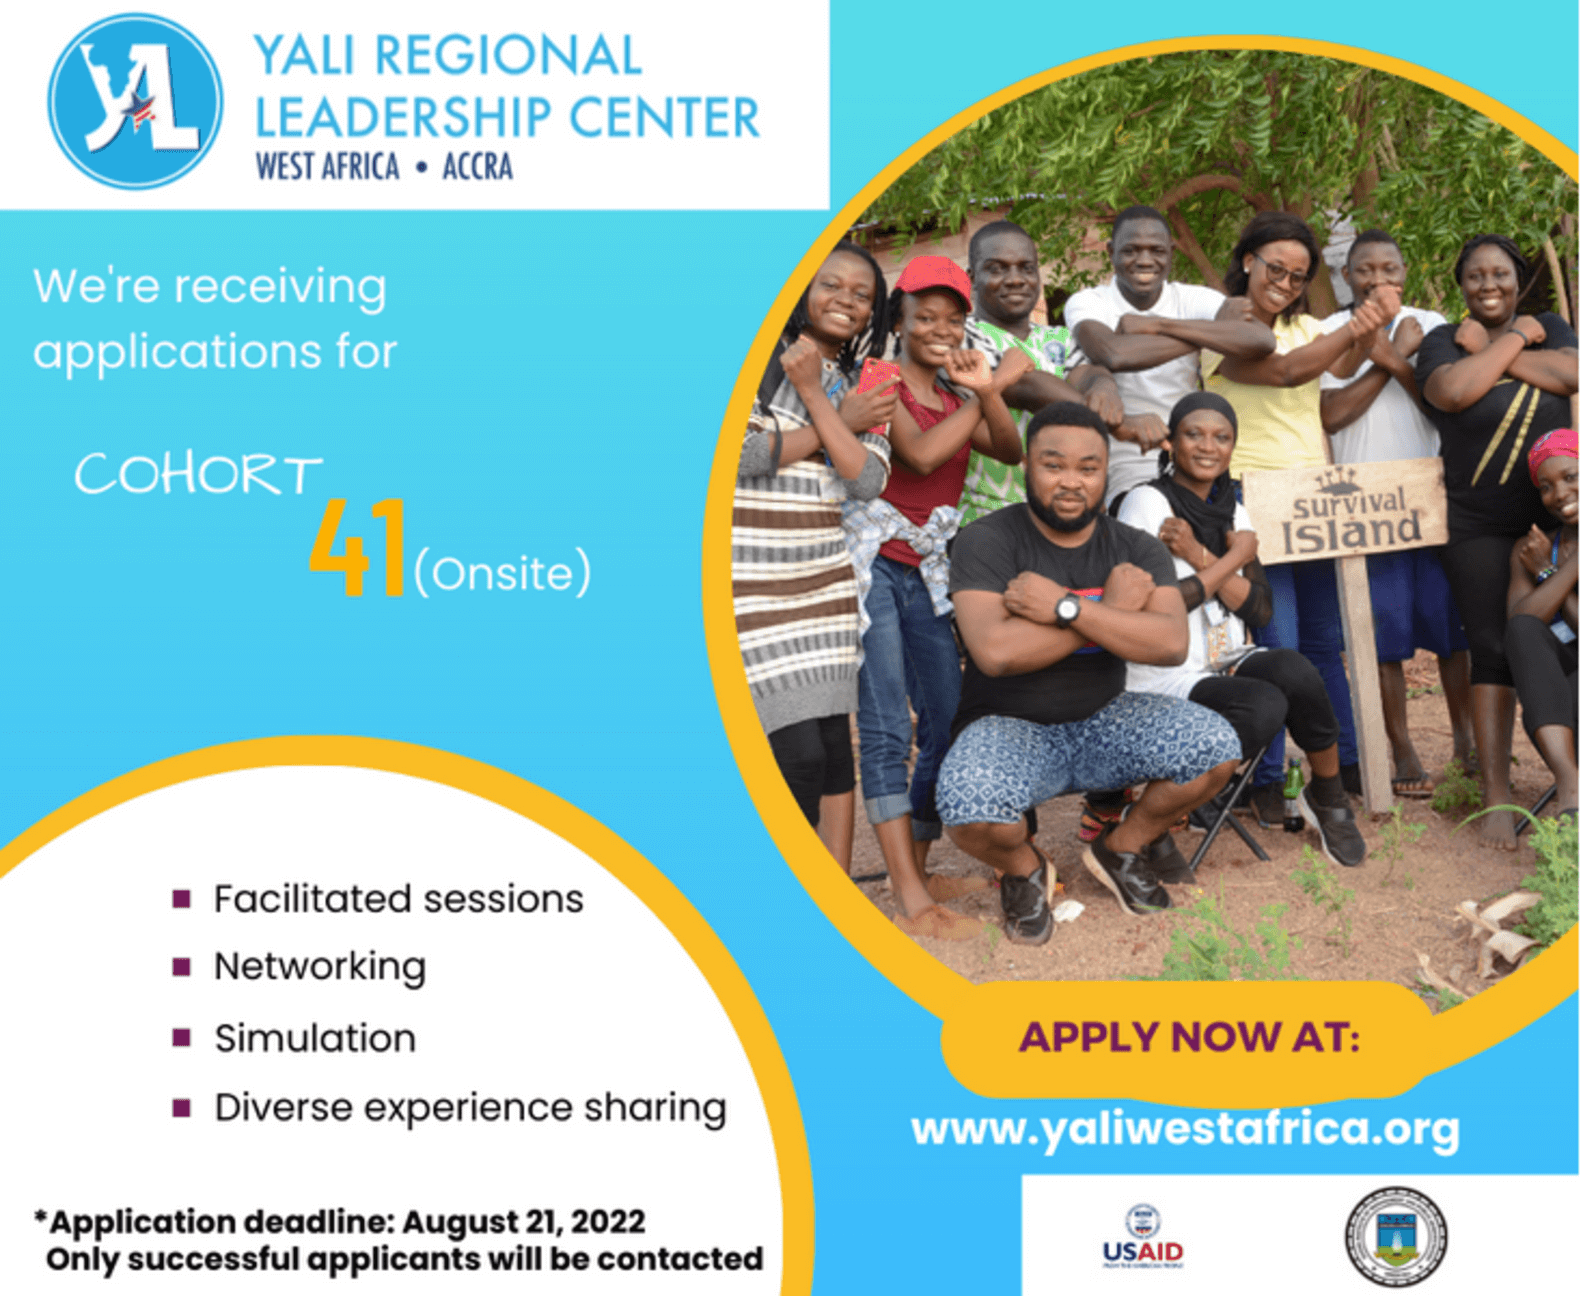 Apply for YALI RLC West Africa Emerging Leaders Program (Cohort 41)